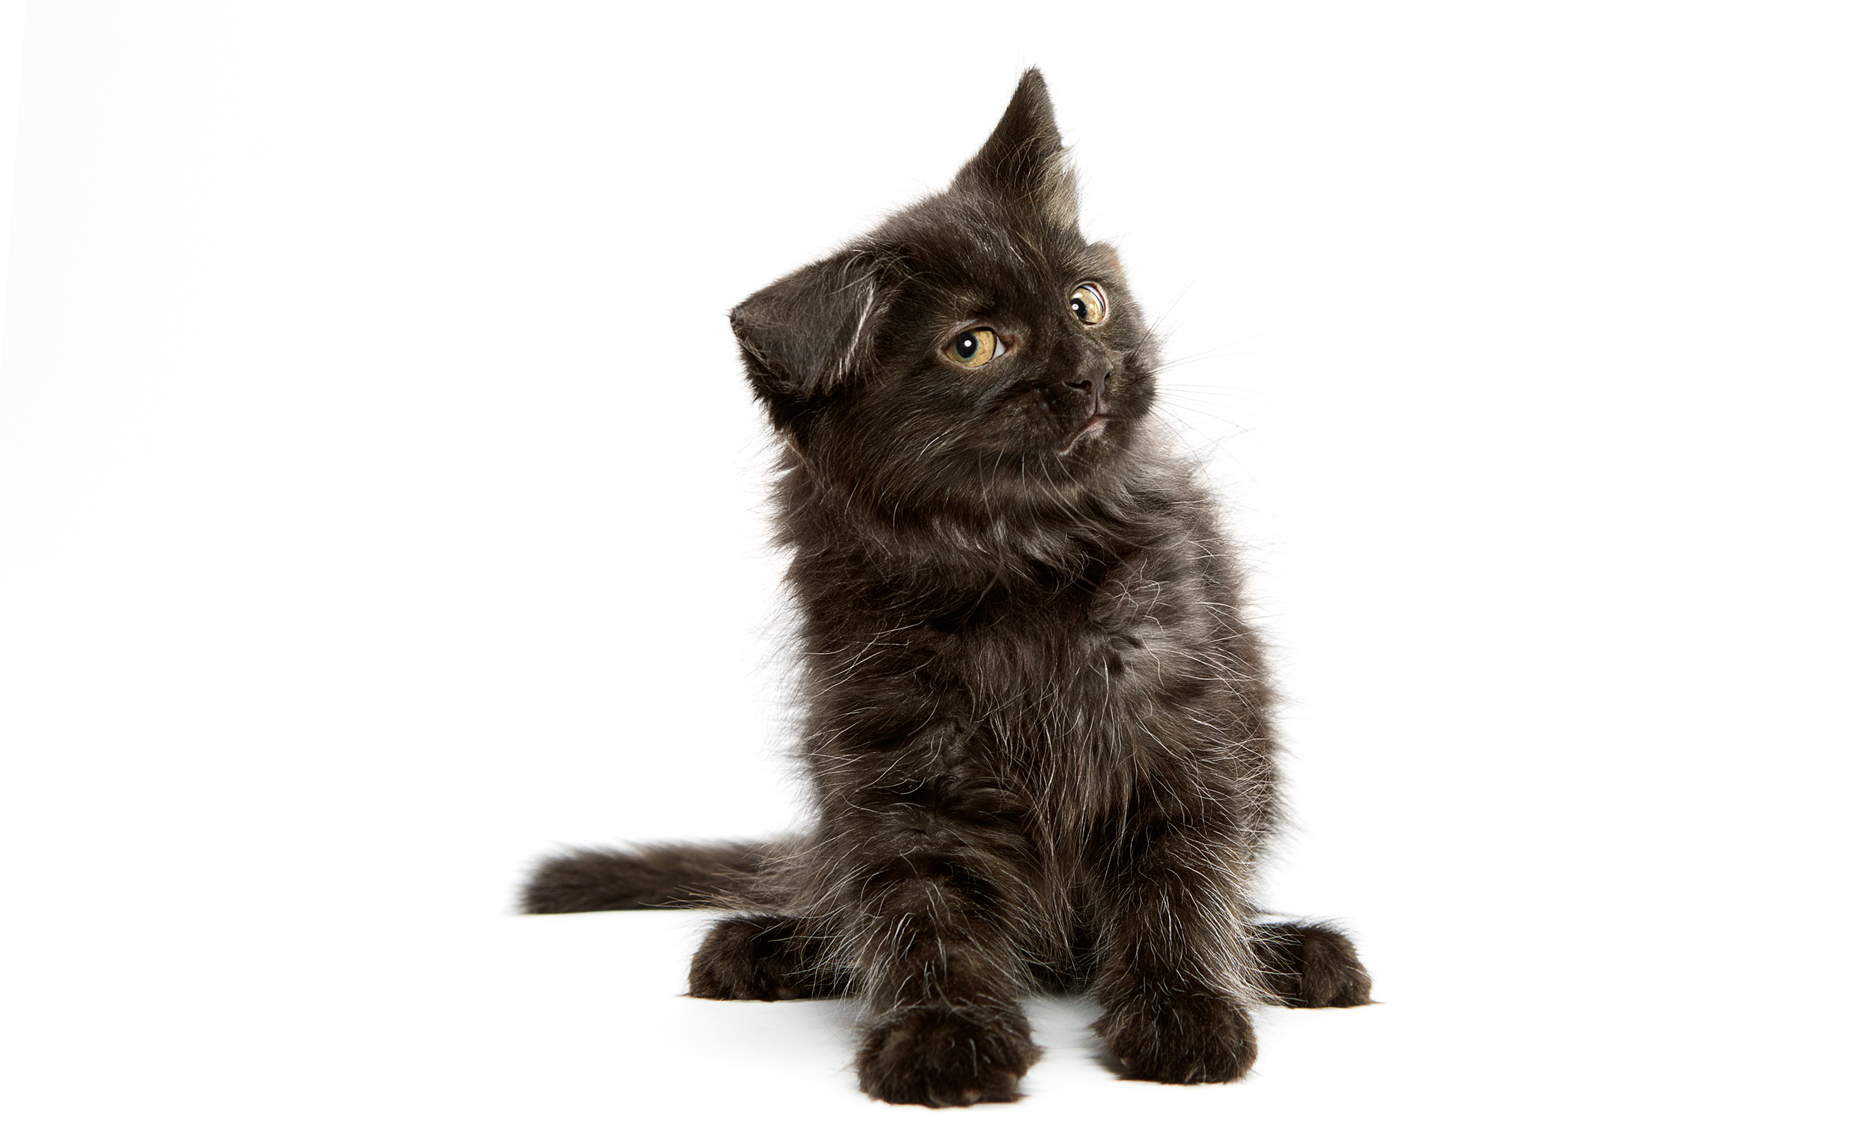 expressive fuzzy black kitten